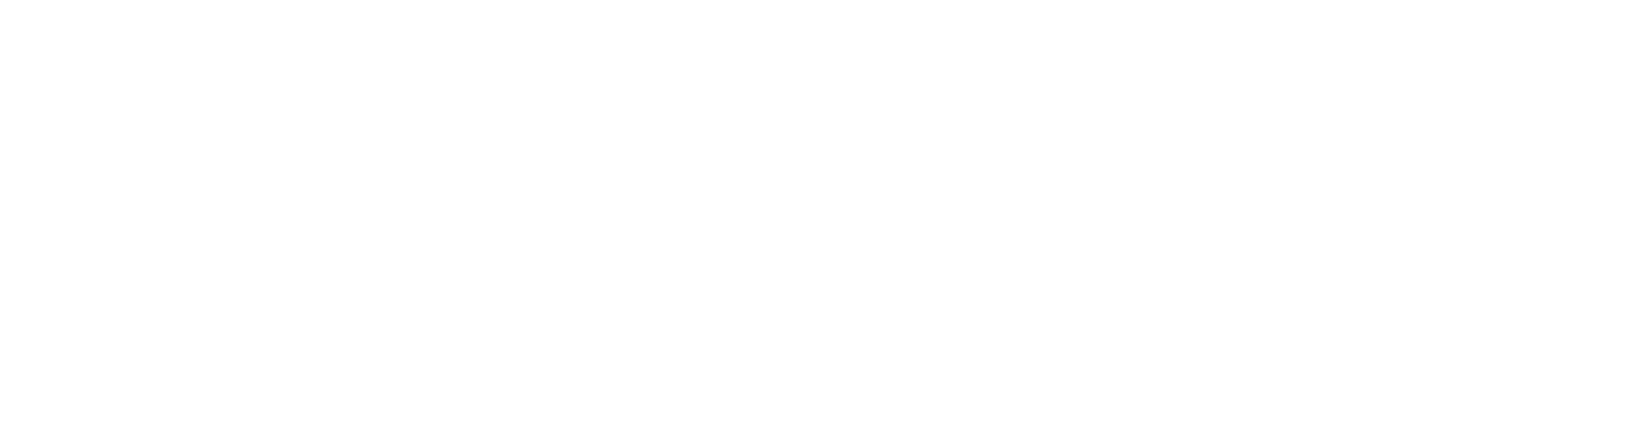 Github logo large for dark backgrounds (transparent PNG)